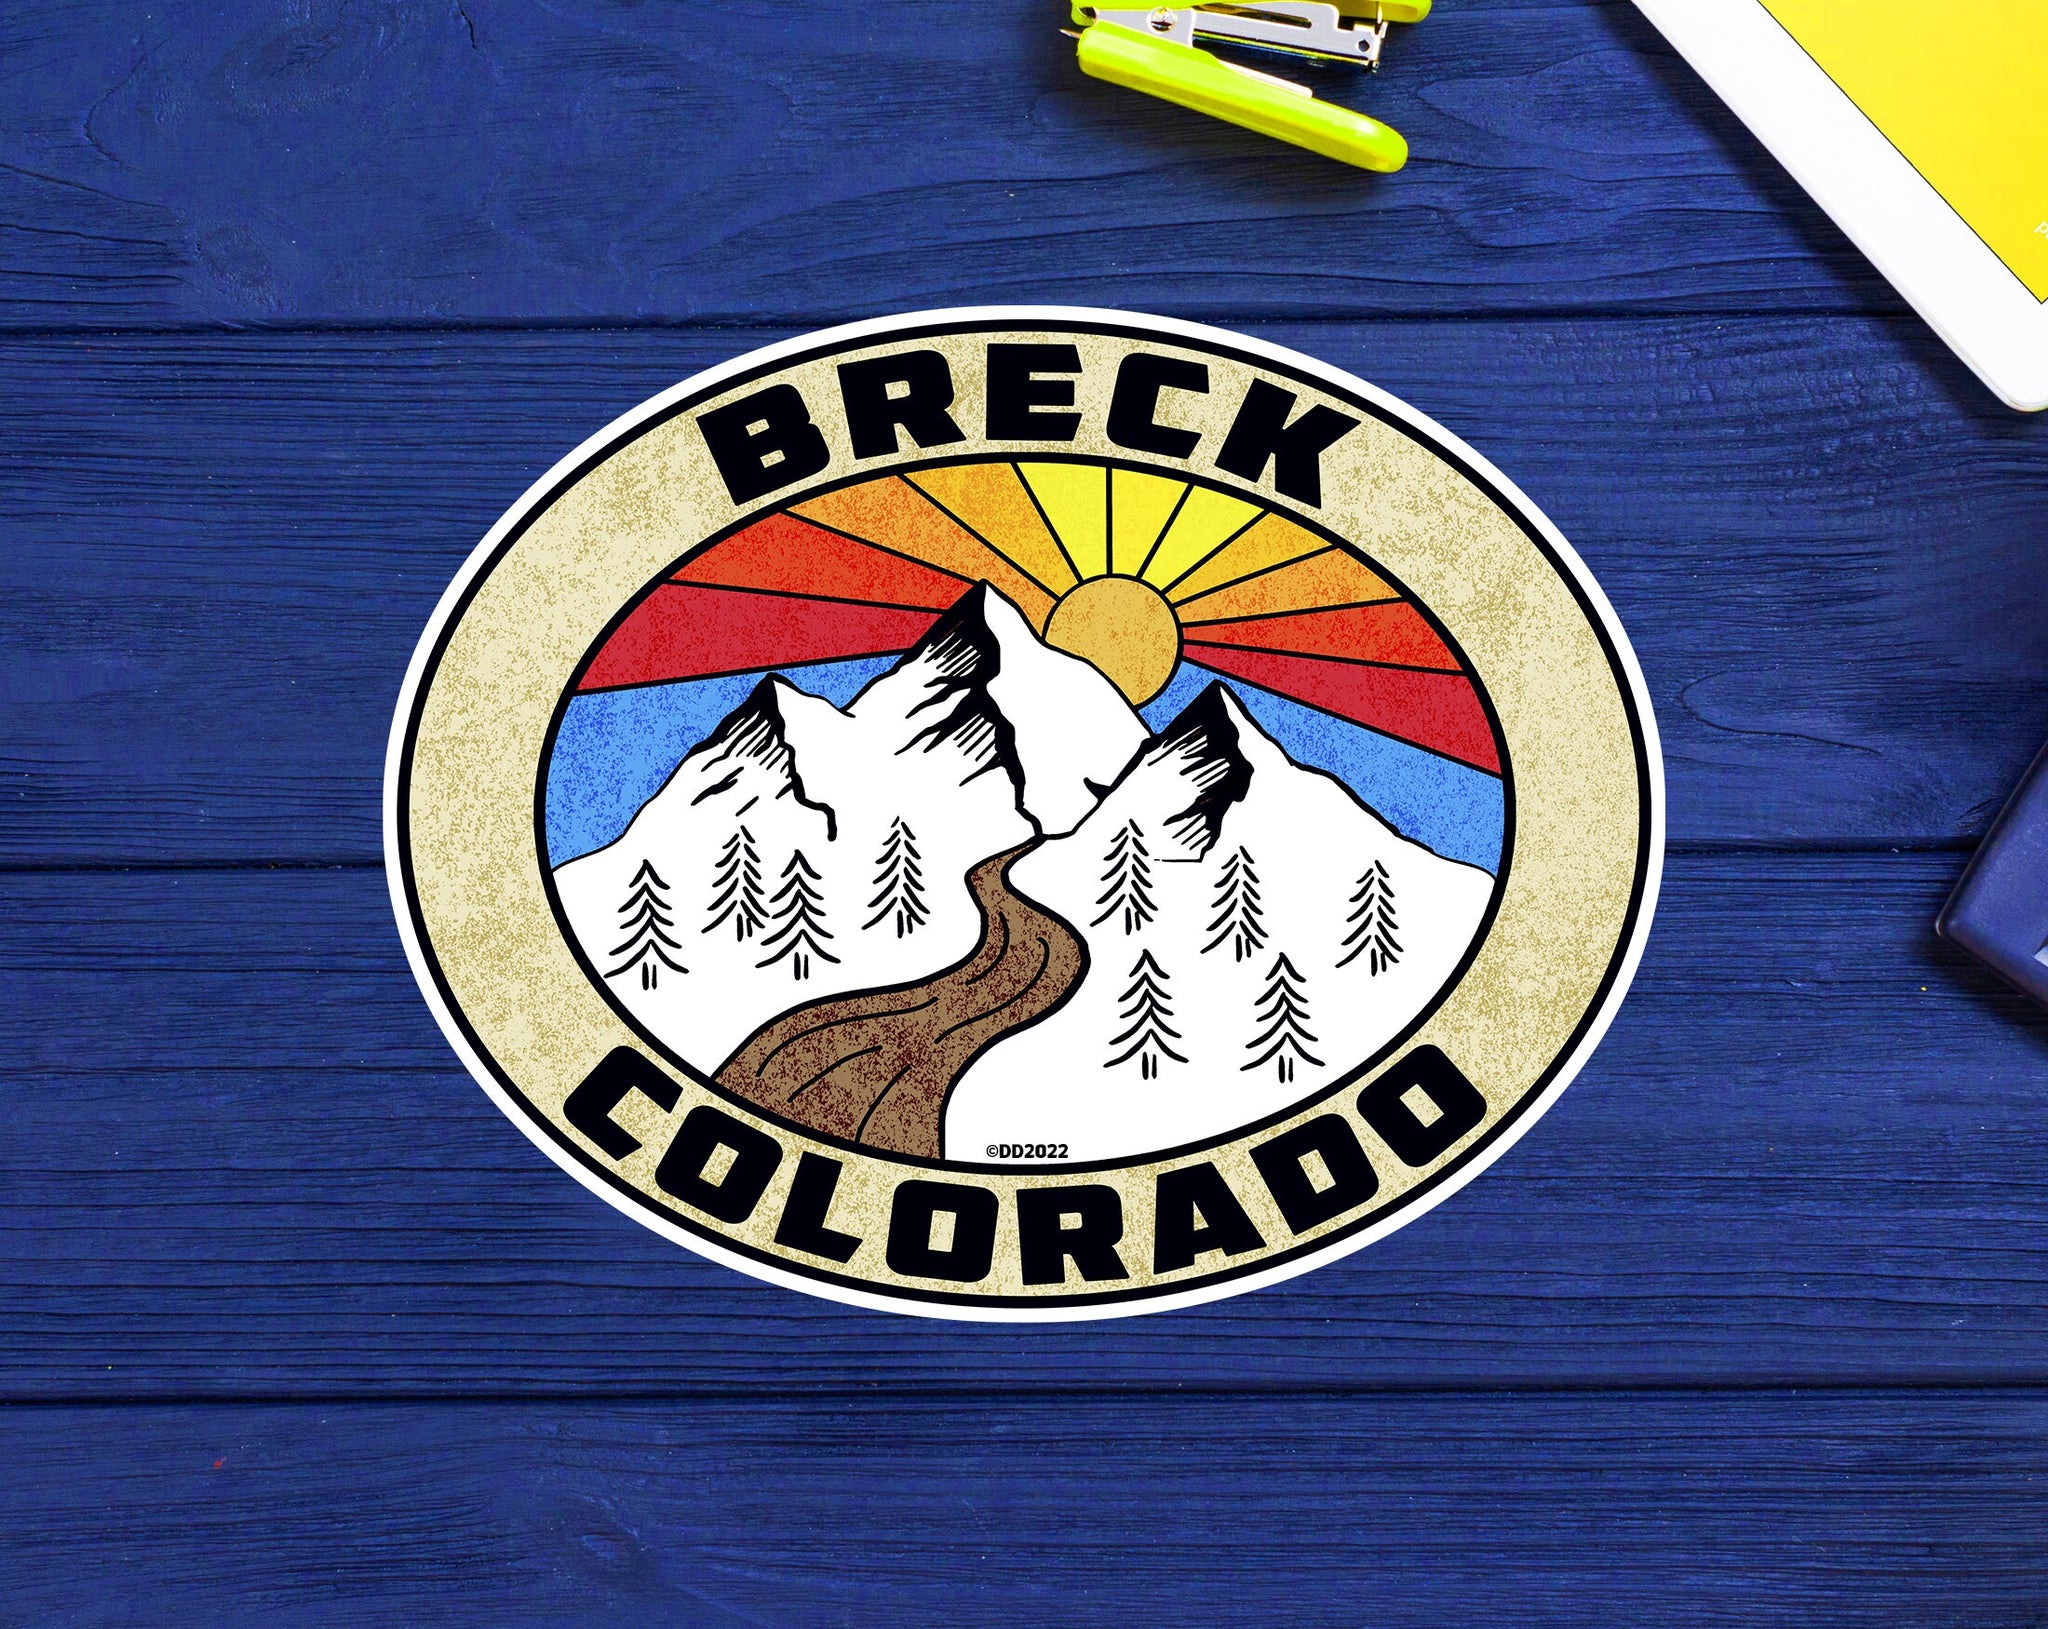 Ski Breck Colorado Skiing Decal Sticker 3.5" x 2.75" Vinyl Laptop Bumper Luggage Breckenridge